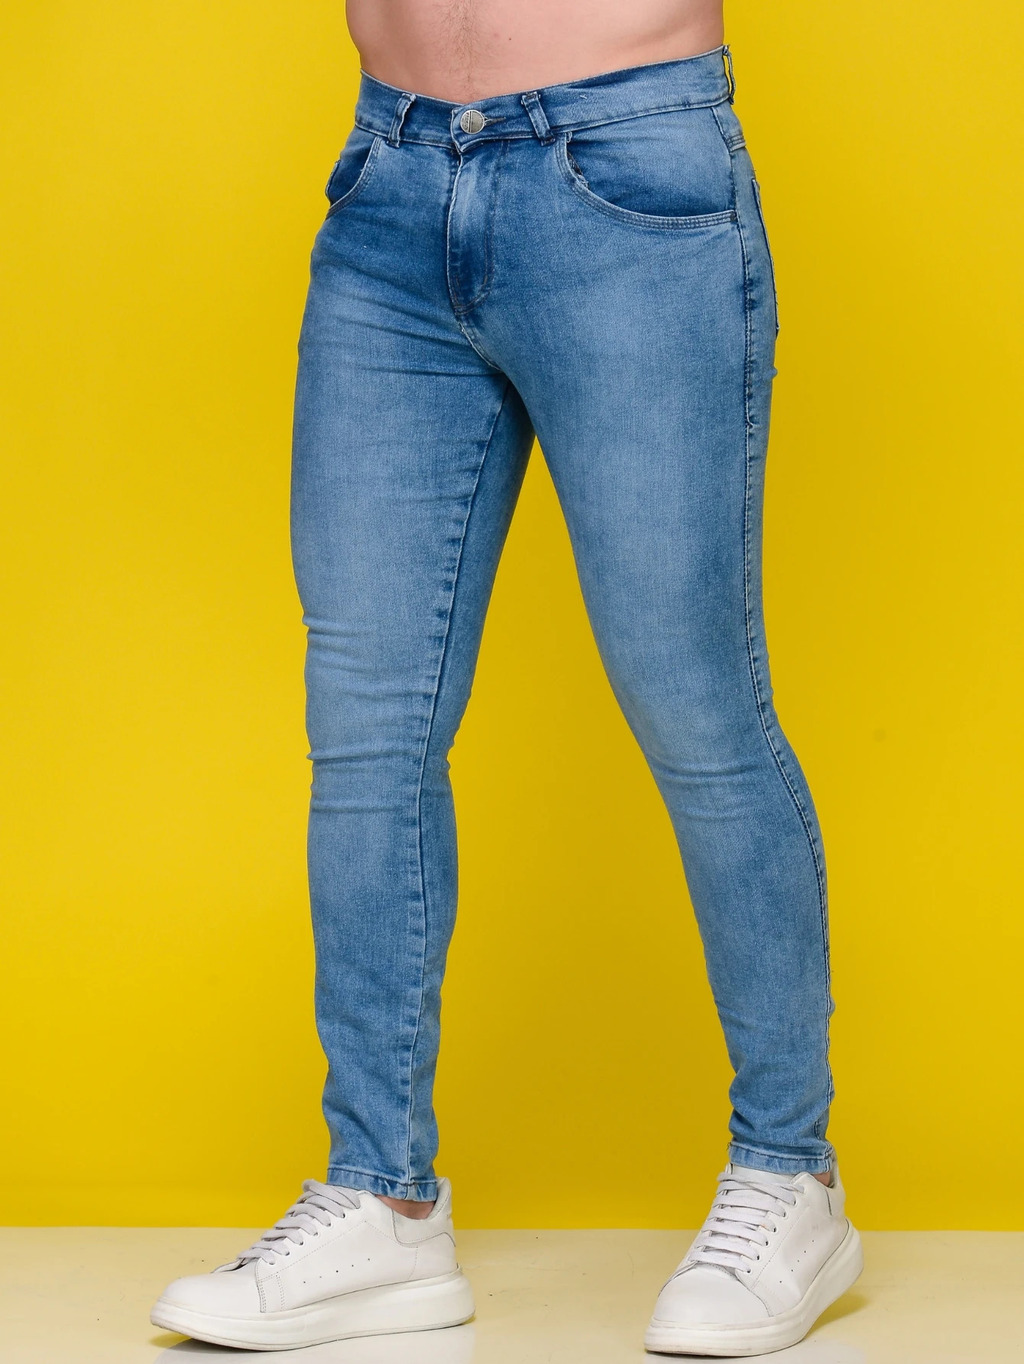 Calça Jeans Masculina Super Skinny Marmorizada Fashion Moda Lavagem Clara